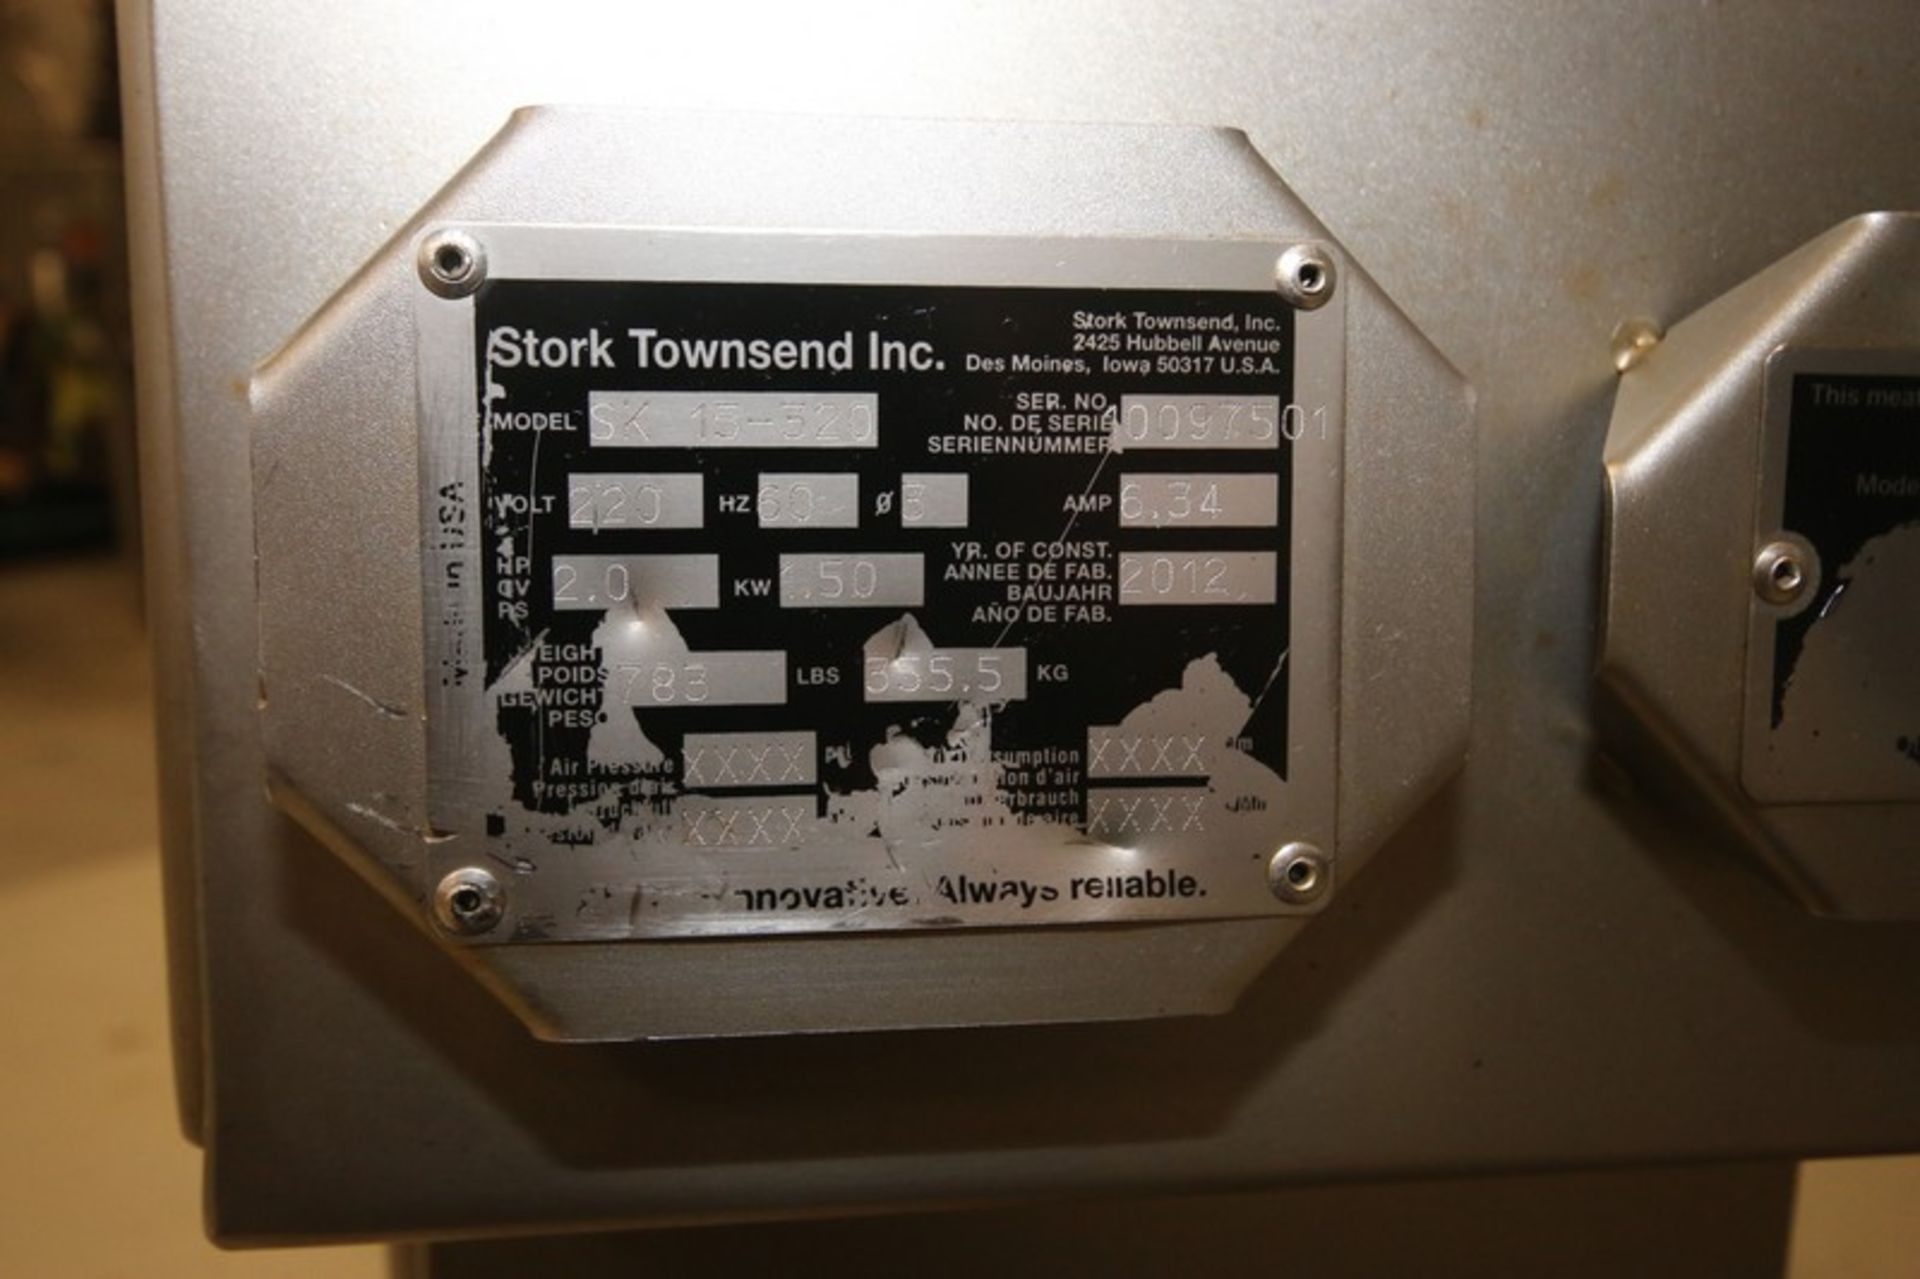 Stork Townsend S/S Skinner, Model SK-15-320, SN 0097501, with 14" W Belt, 220V, Mounted on - Image 7 of 7